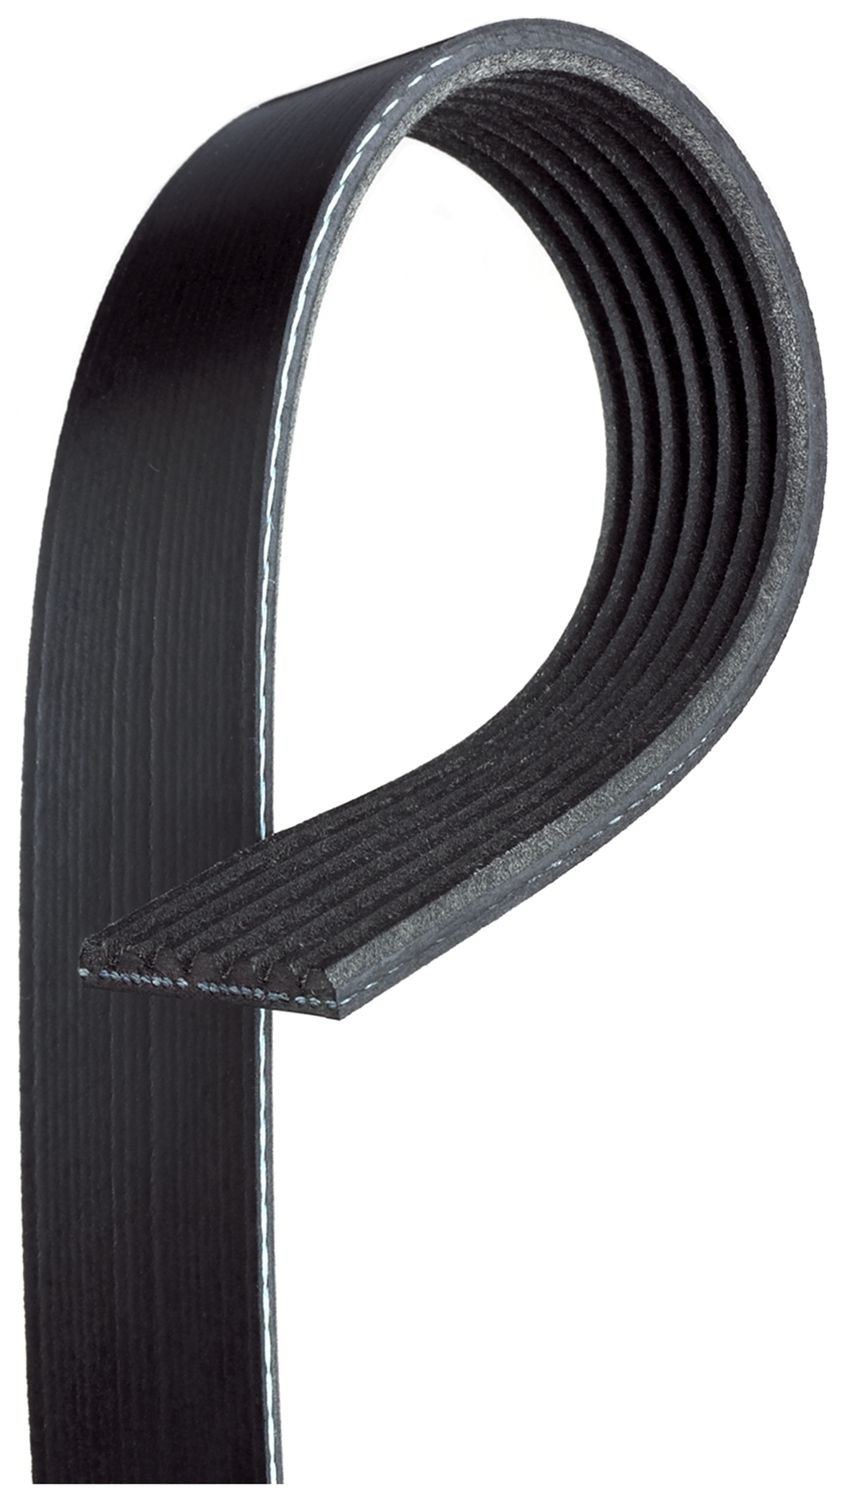 GATES 7PK2315 Serpentine belt 2315mm, 7, G-Force™ C12™ CVT Belt